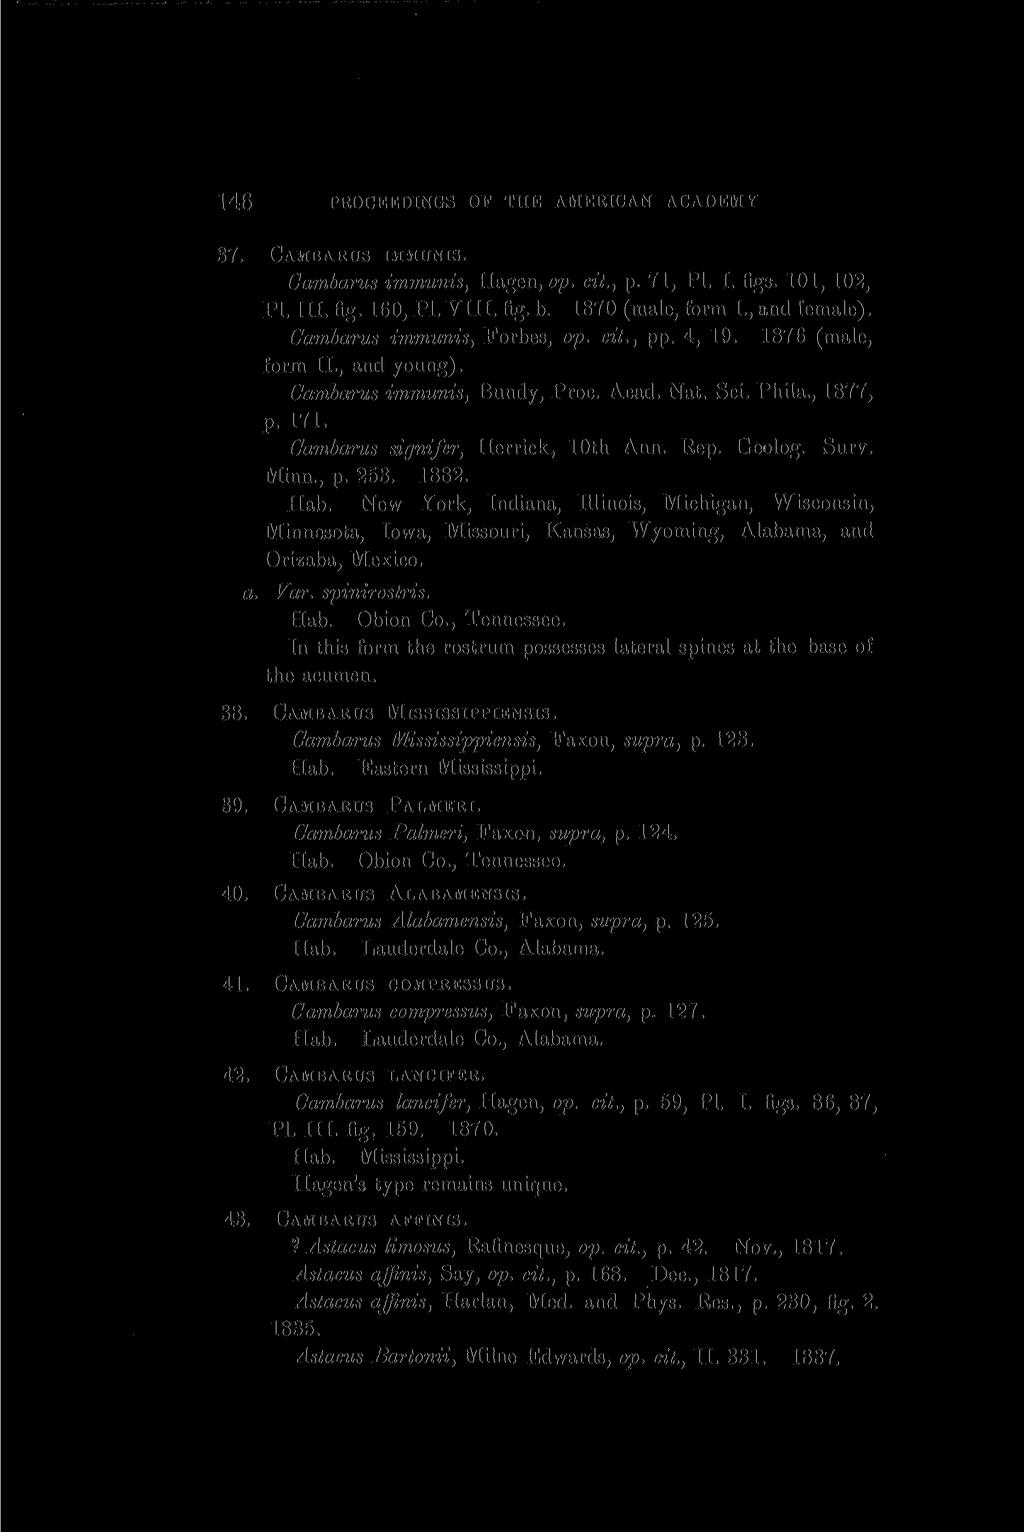 146 PROCEEDINGS OF TIIE AMERICAN ACADEMY 37. CAMBARUS IMMUNIS. Cambarus immunis, Hagen, op. cit., p. 71, PL I. figs. 101, 102, Pl. III. fig. 160, Pl. VIII. fig. b. 1870 (male, form I., and female).